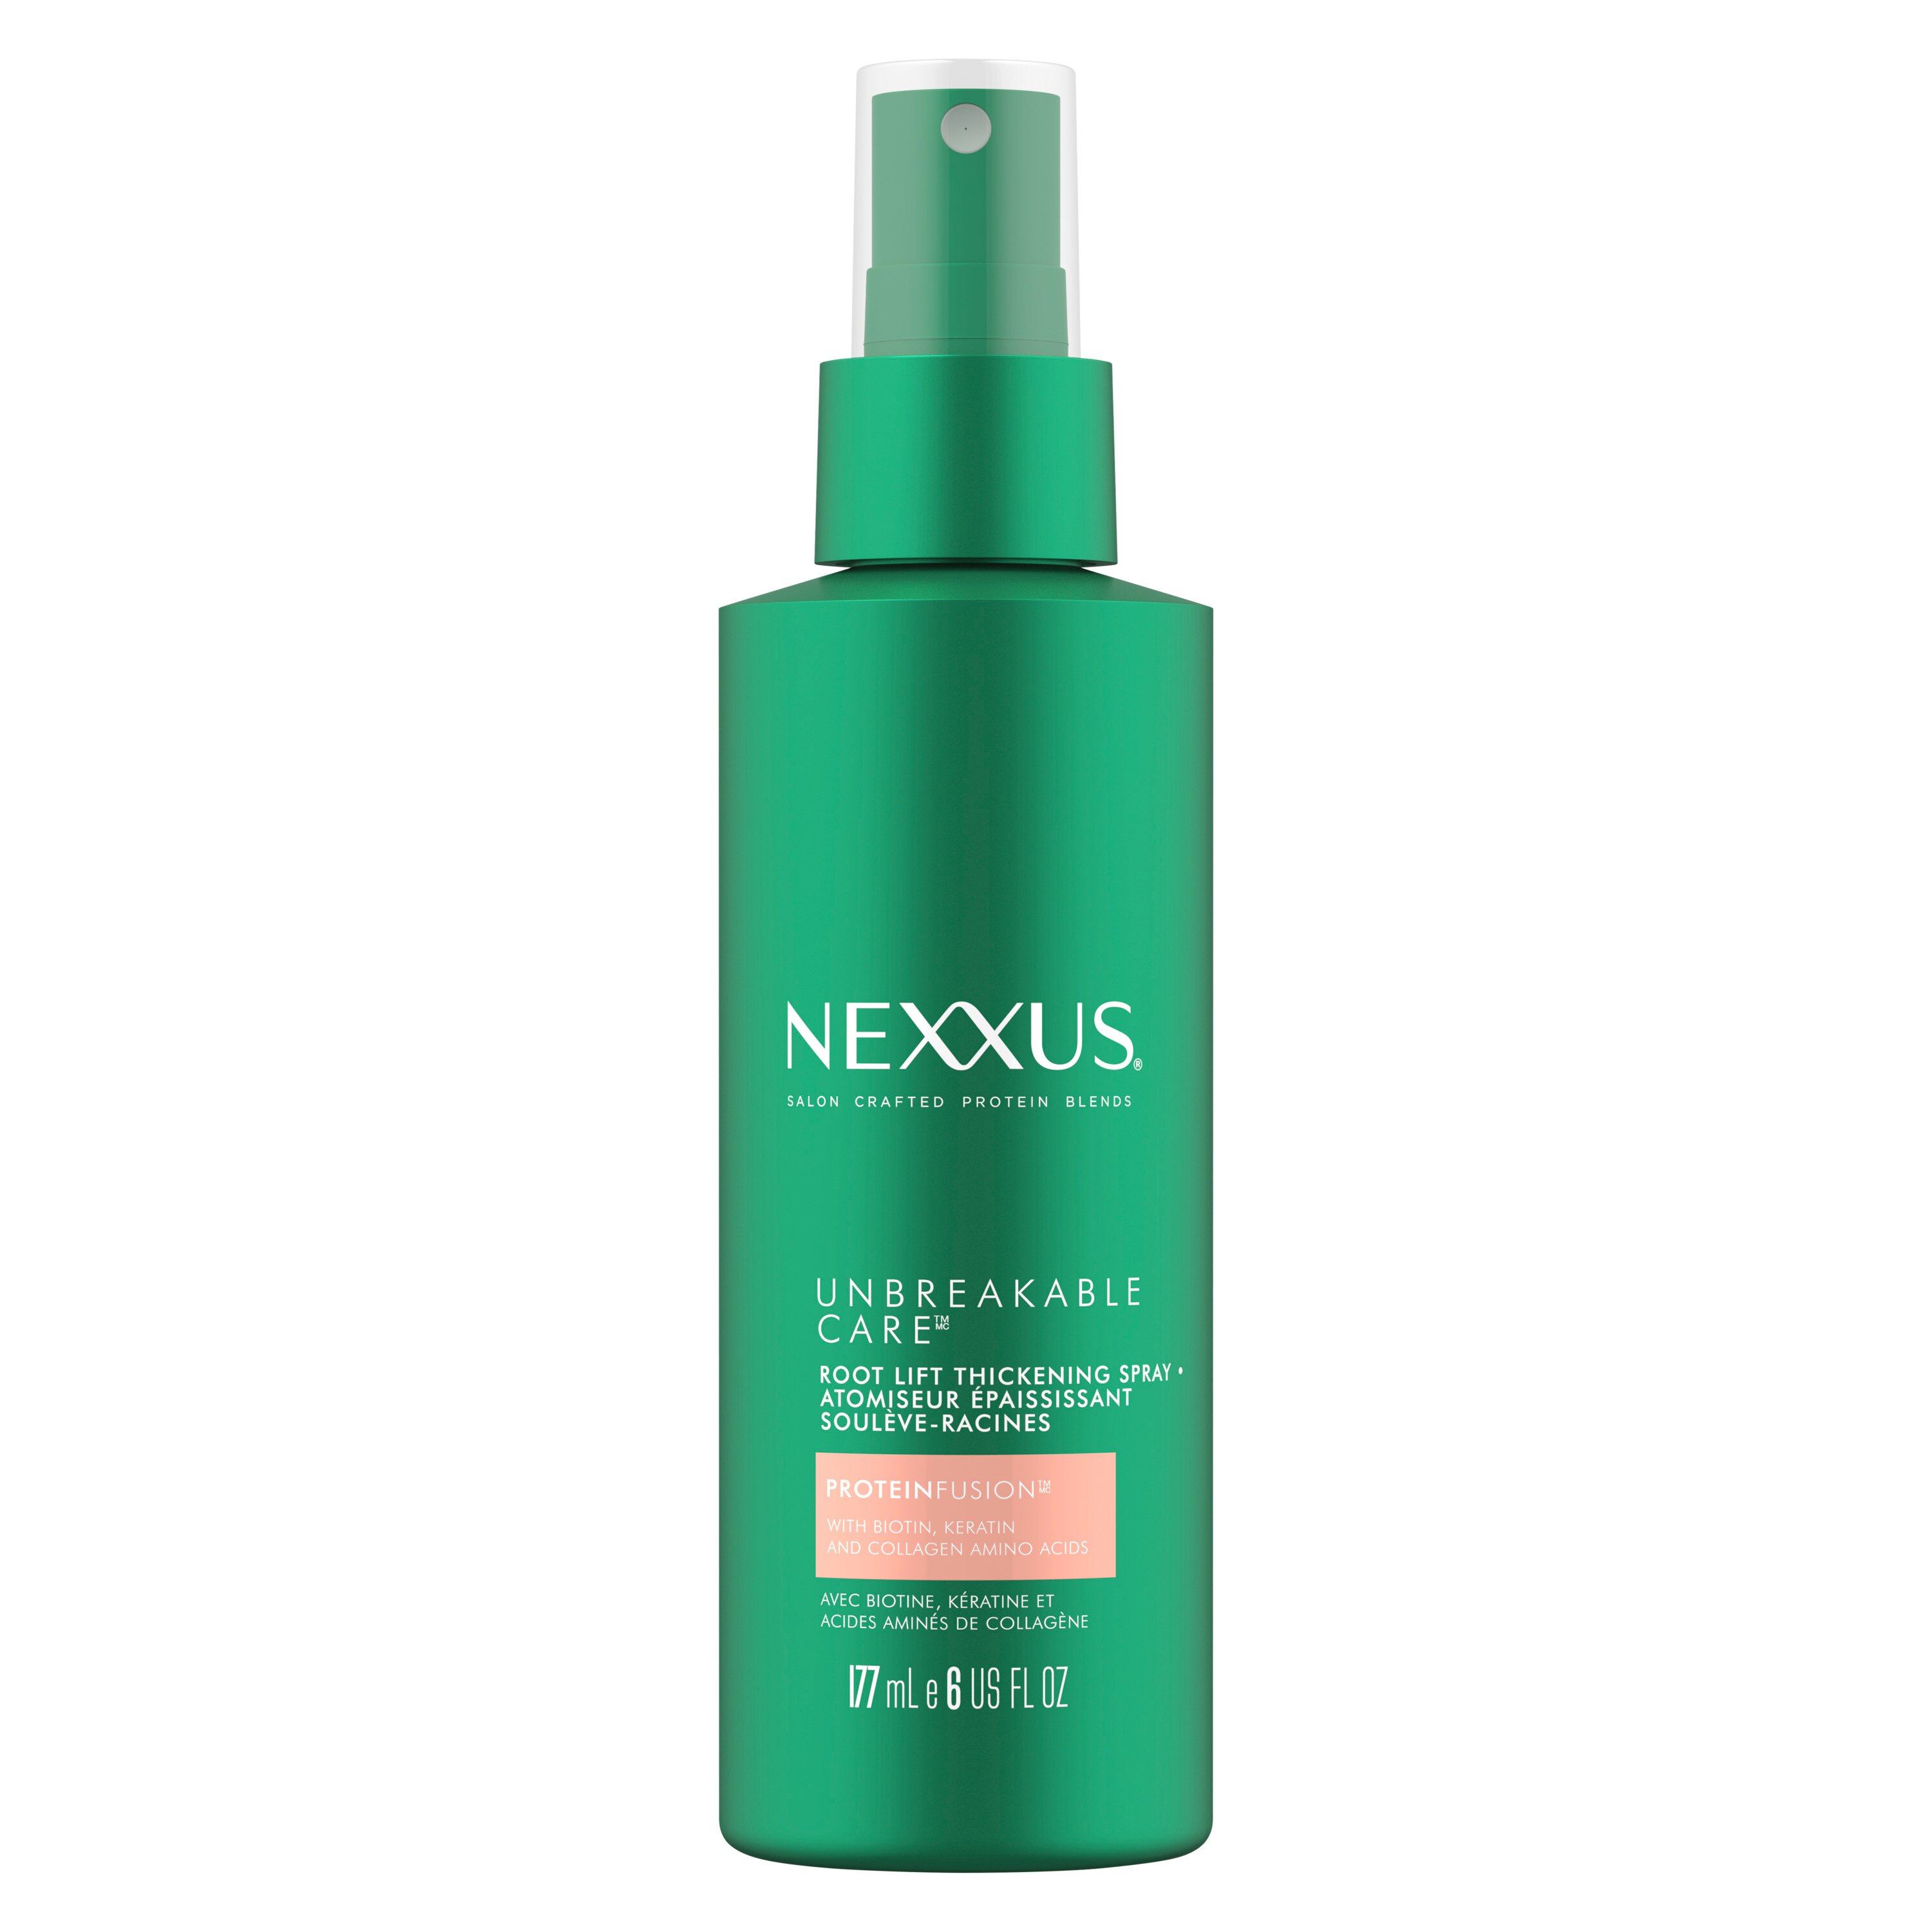 Nexxus Unbreakable Care Root Lift Hair Thickening Spray, 6 oz